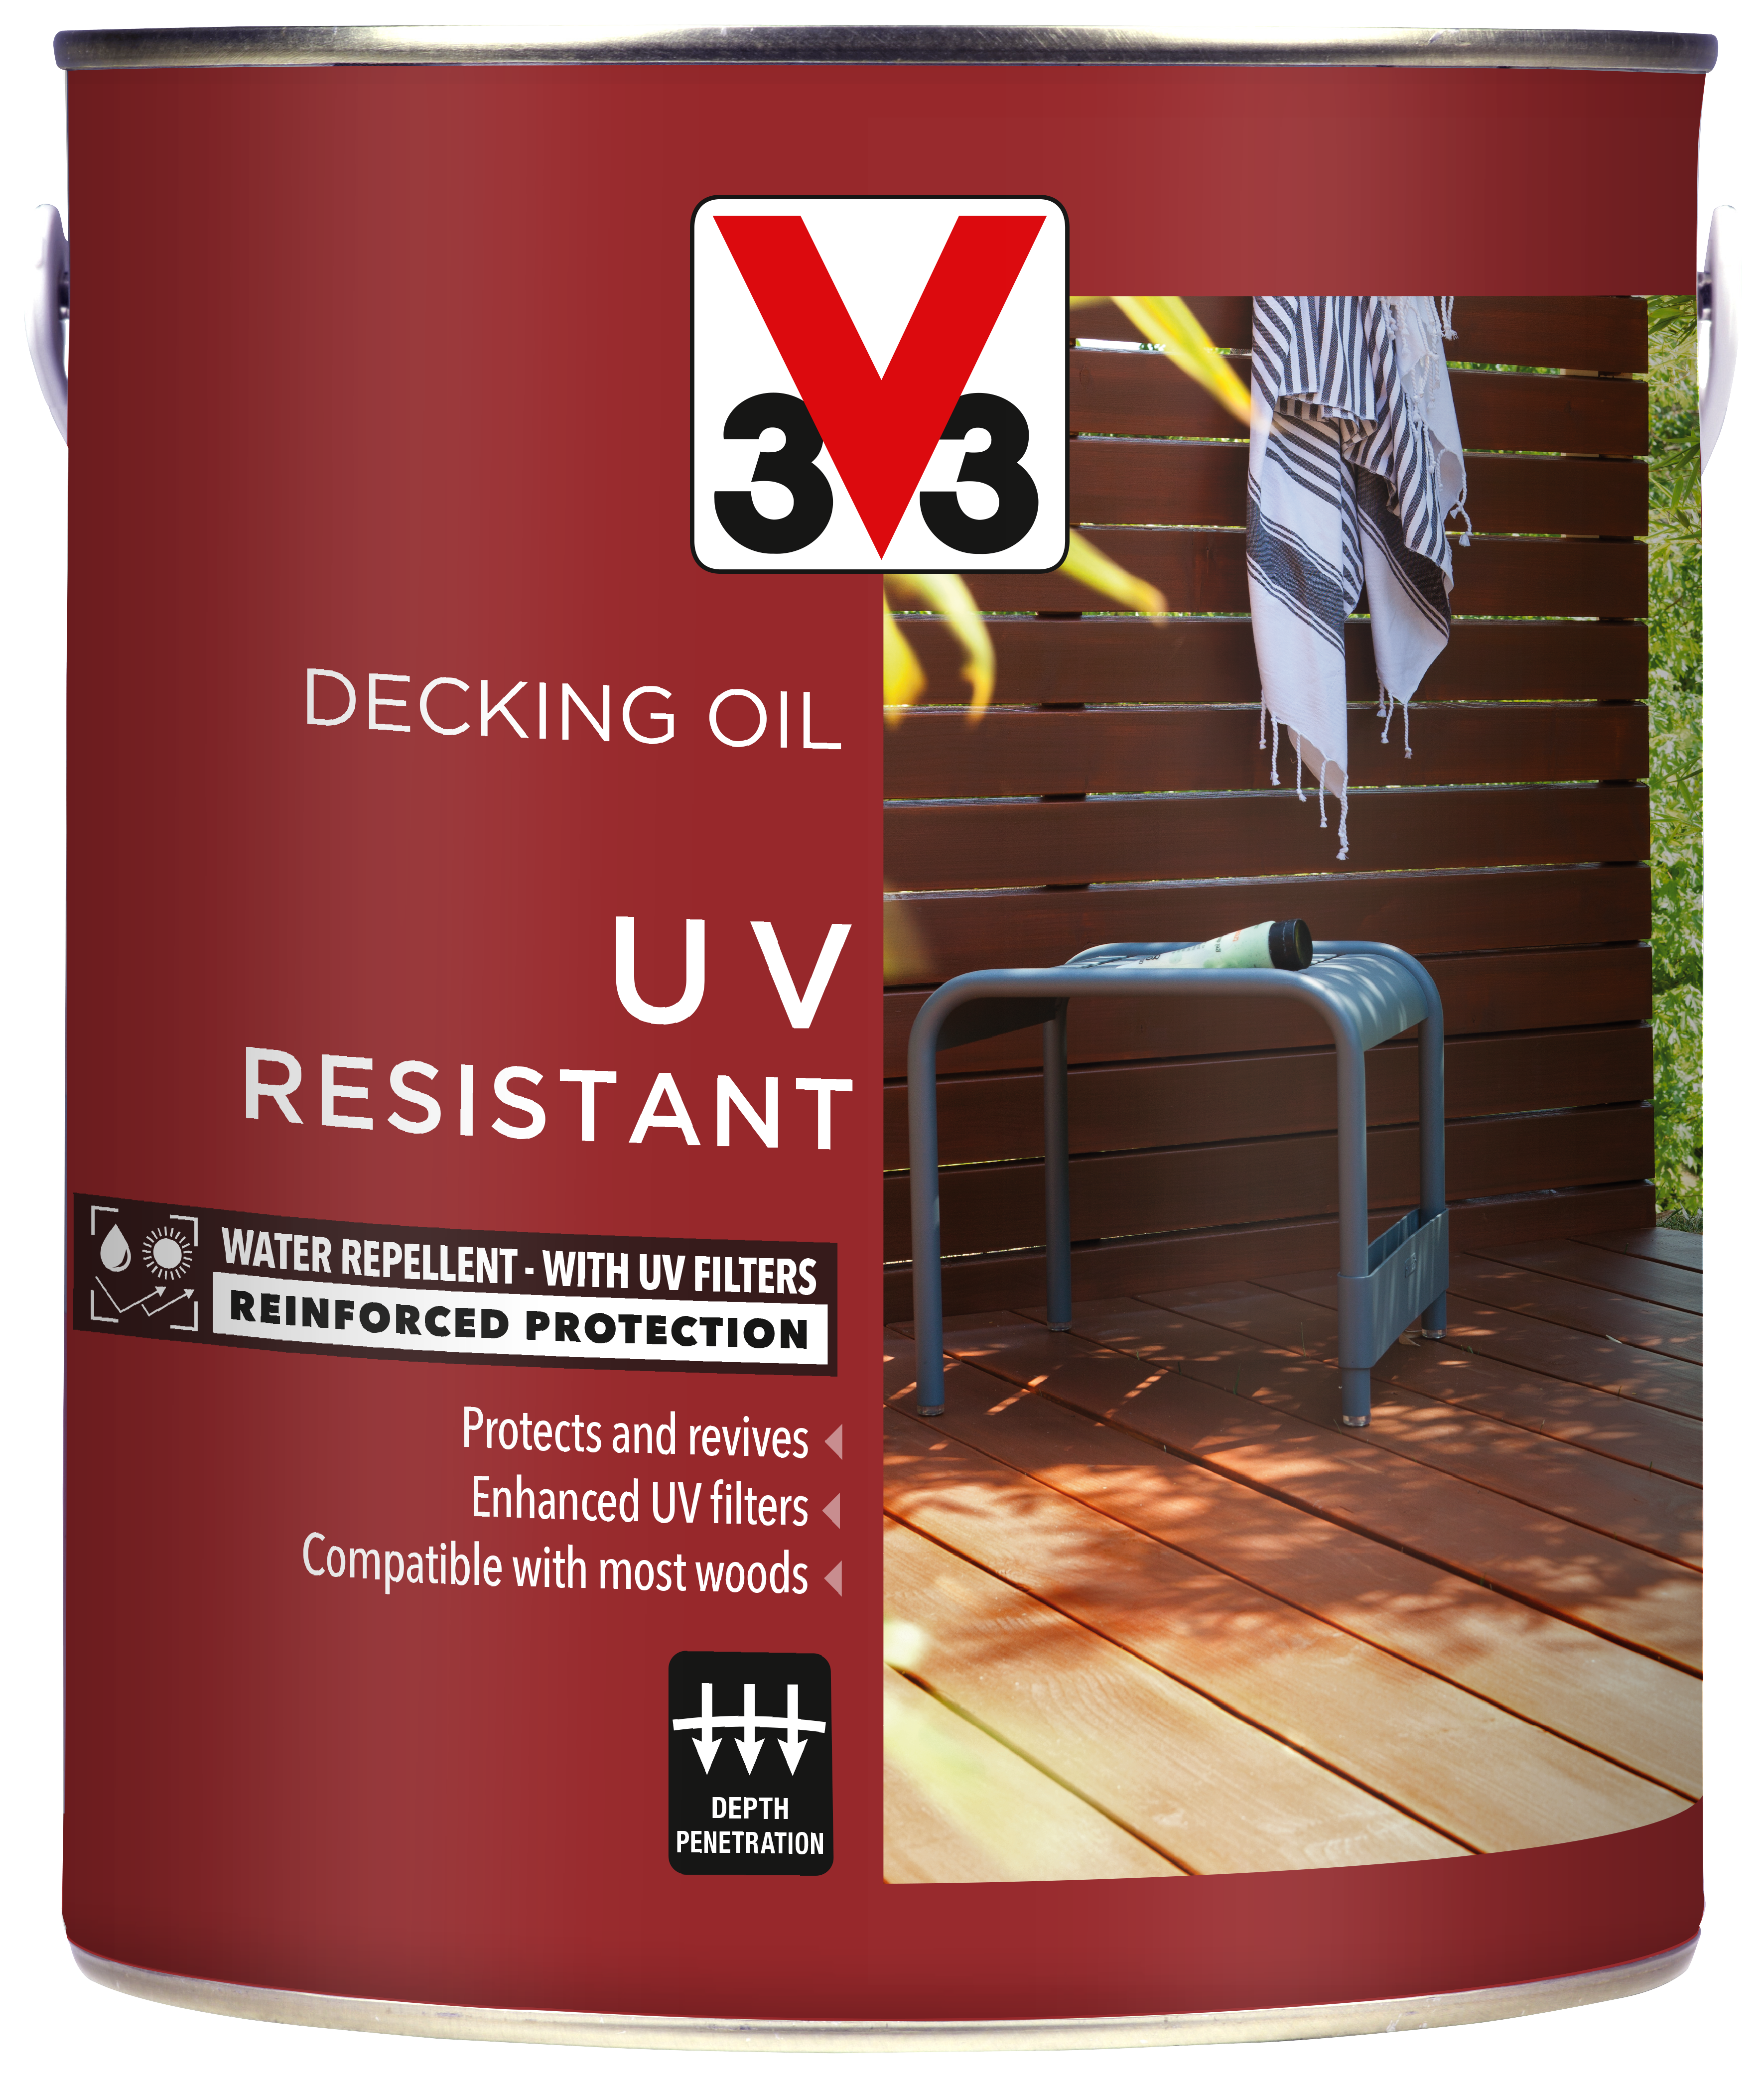 UV Resistant Decking Oil